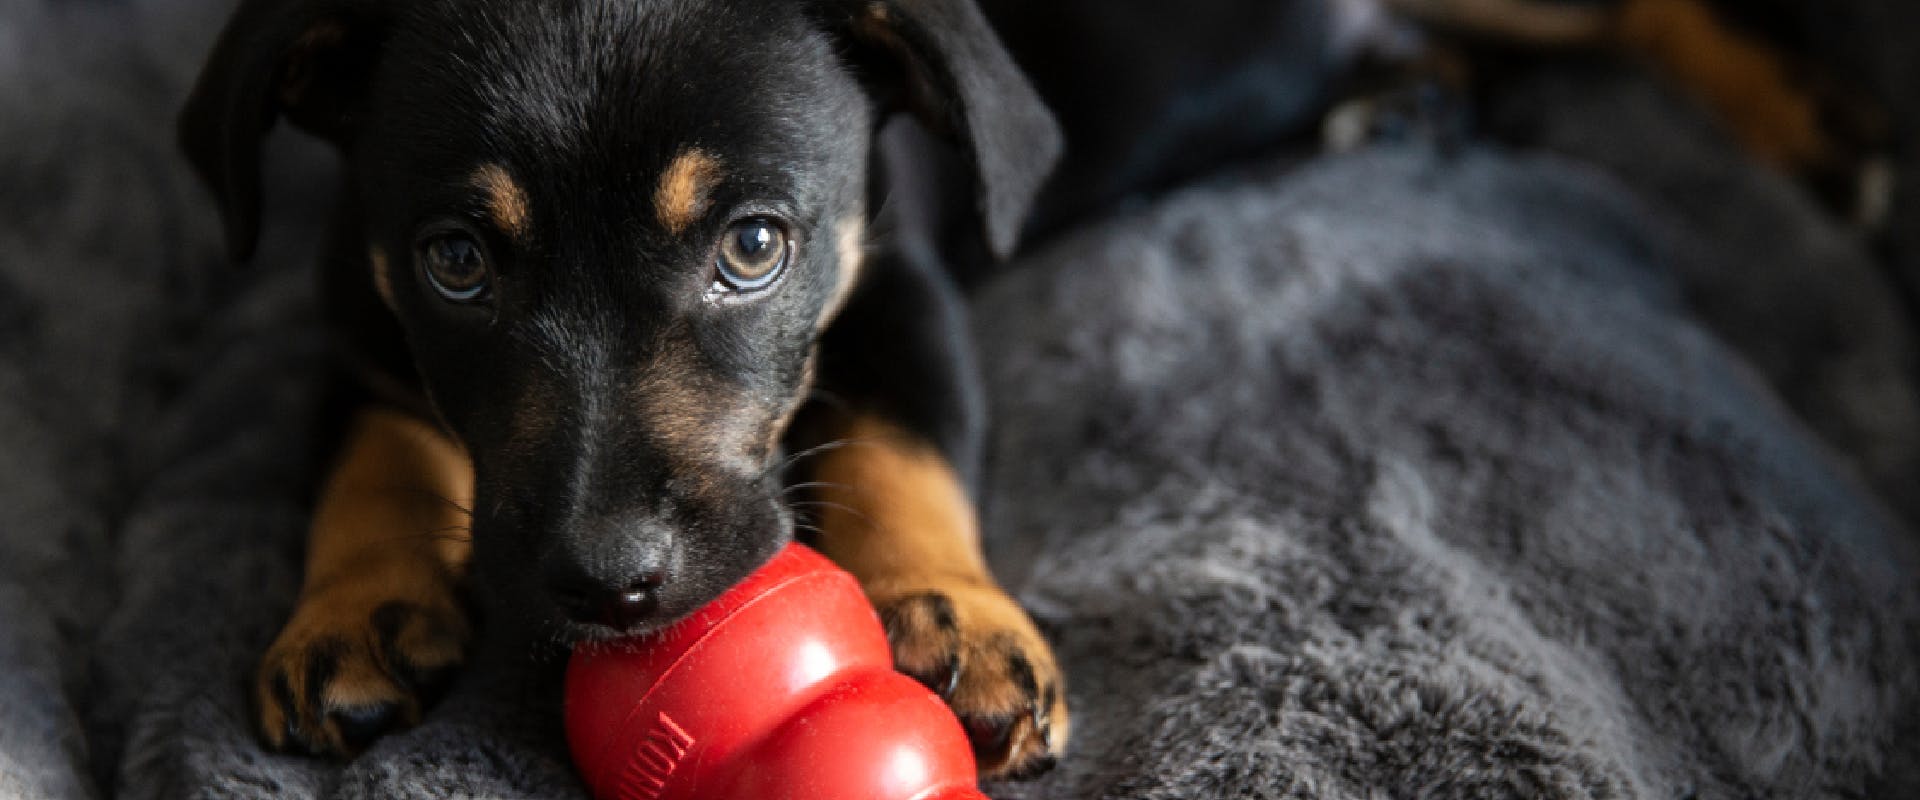 A puppy chews on a toy.